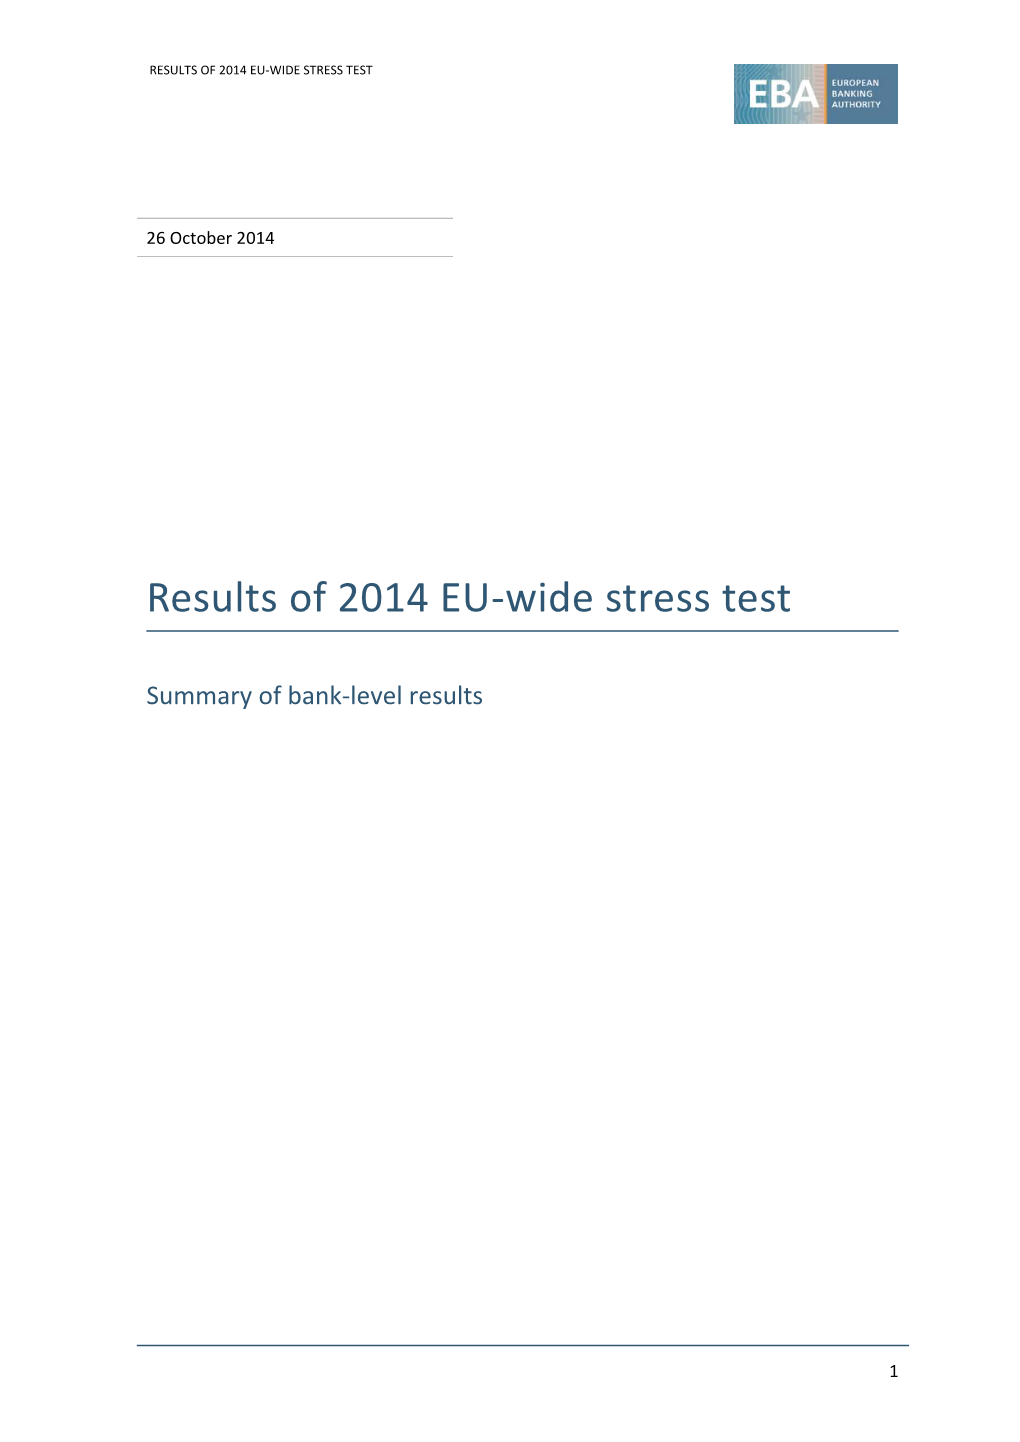 EBA Results of 2014 EU Wide Stress Test